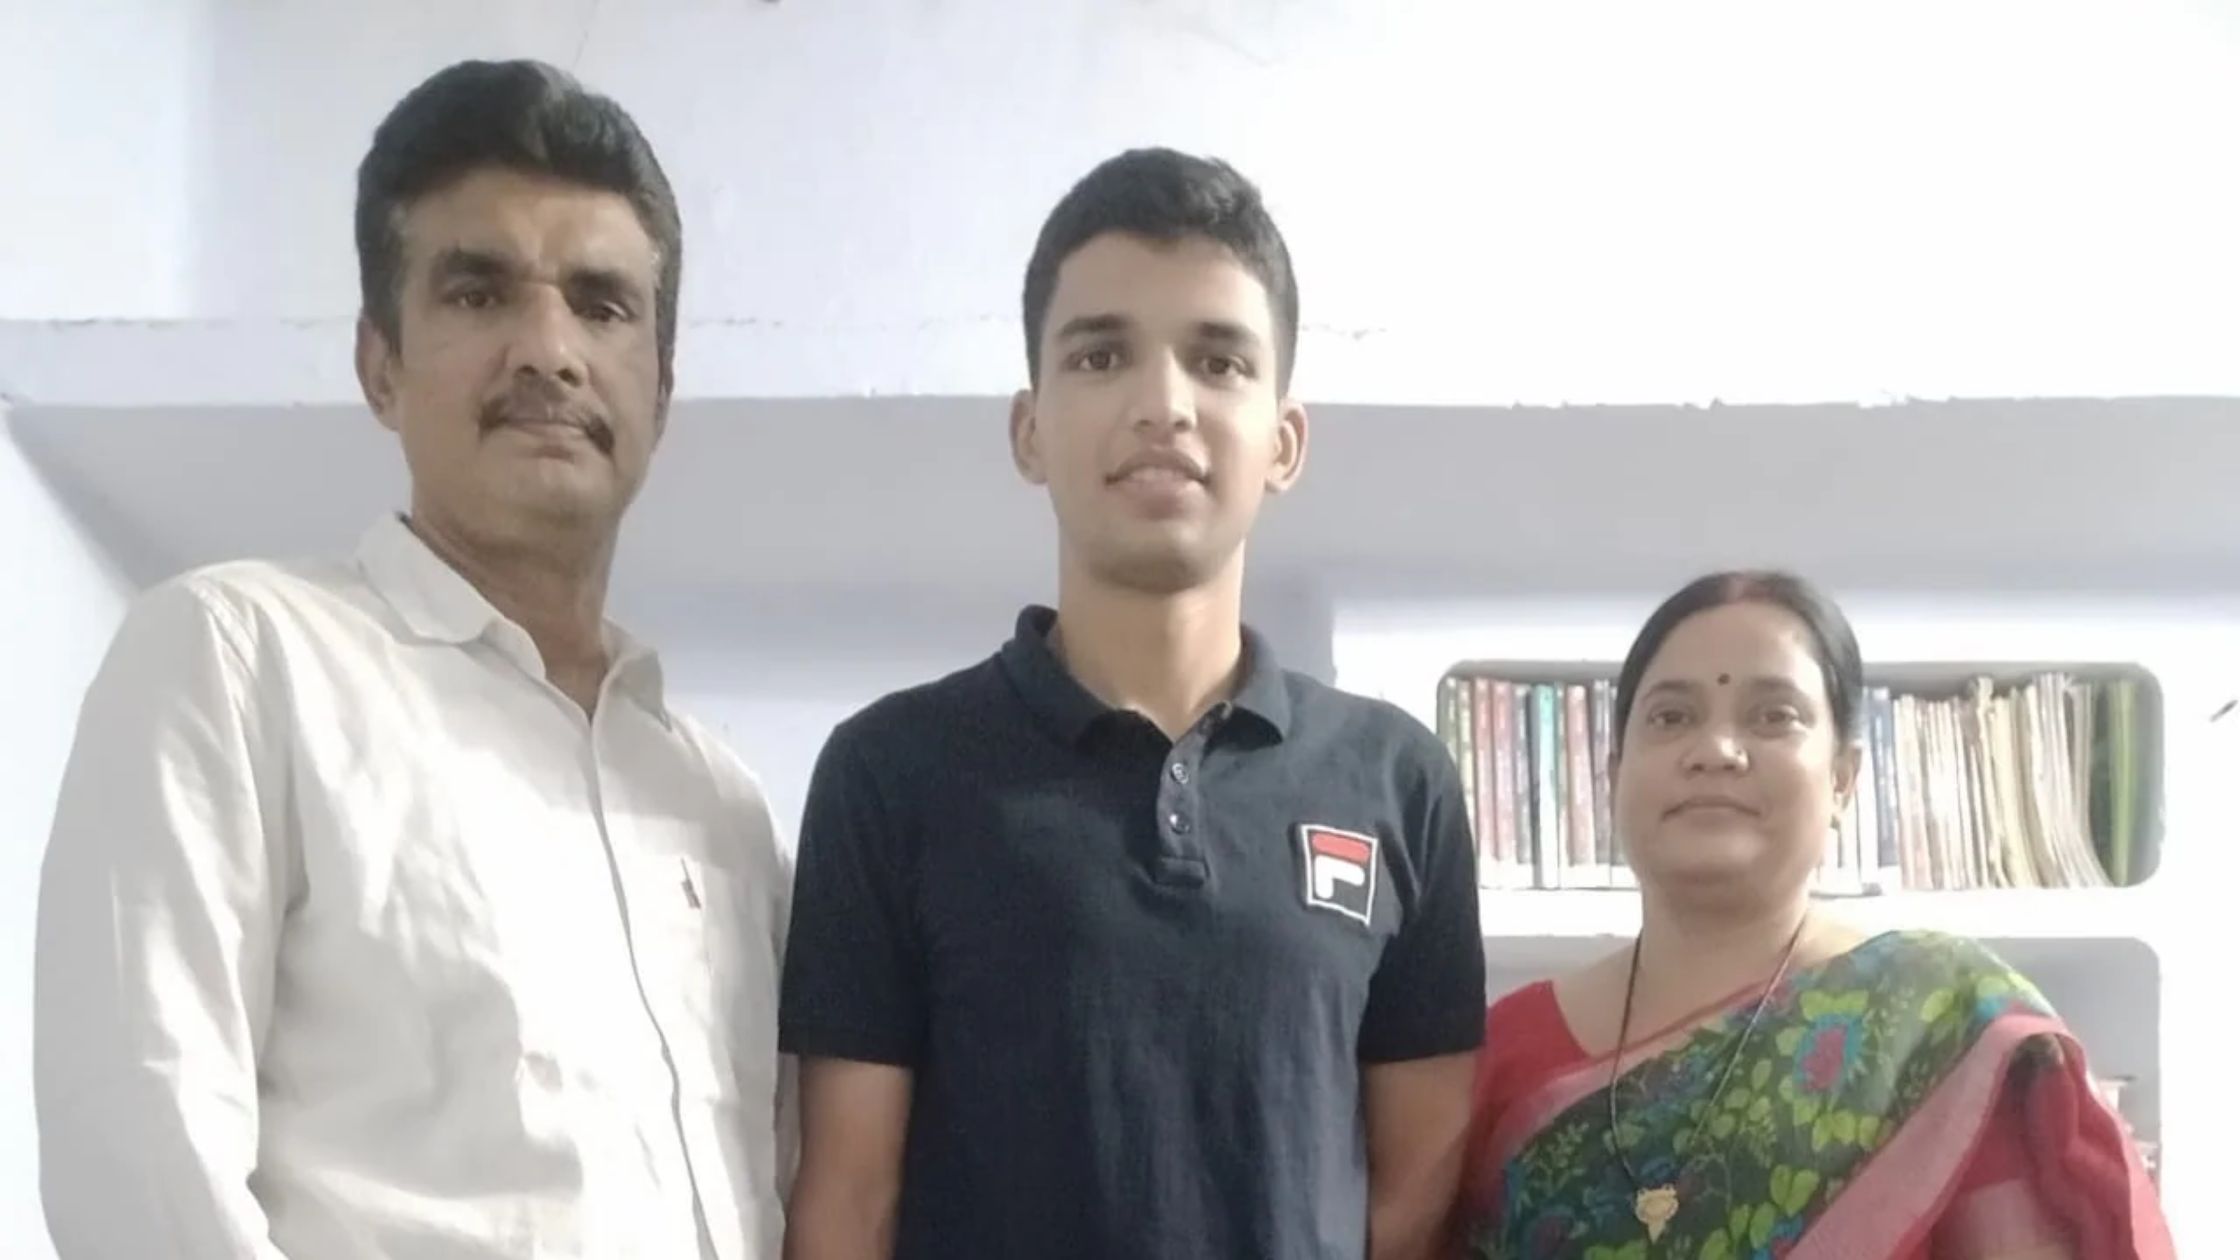 Farmer's son from Bihar did wonders in NDA exam